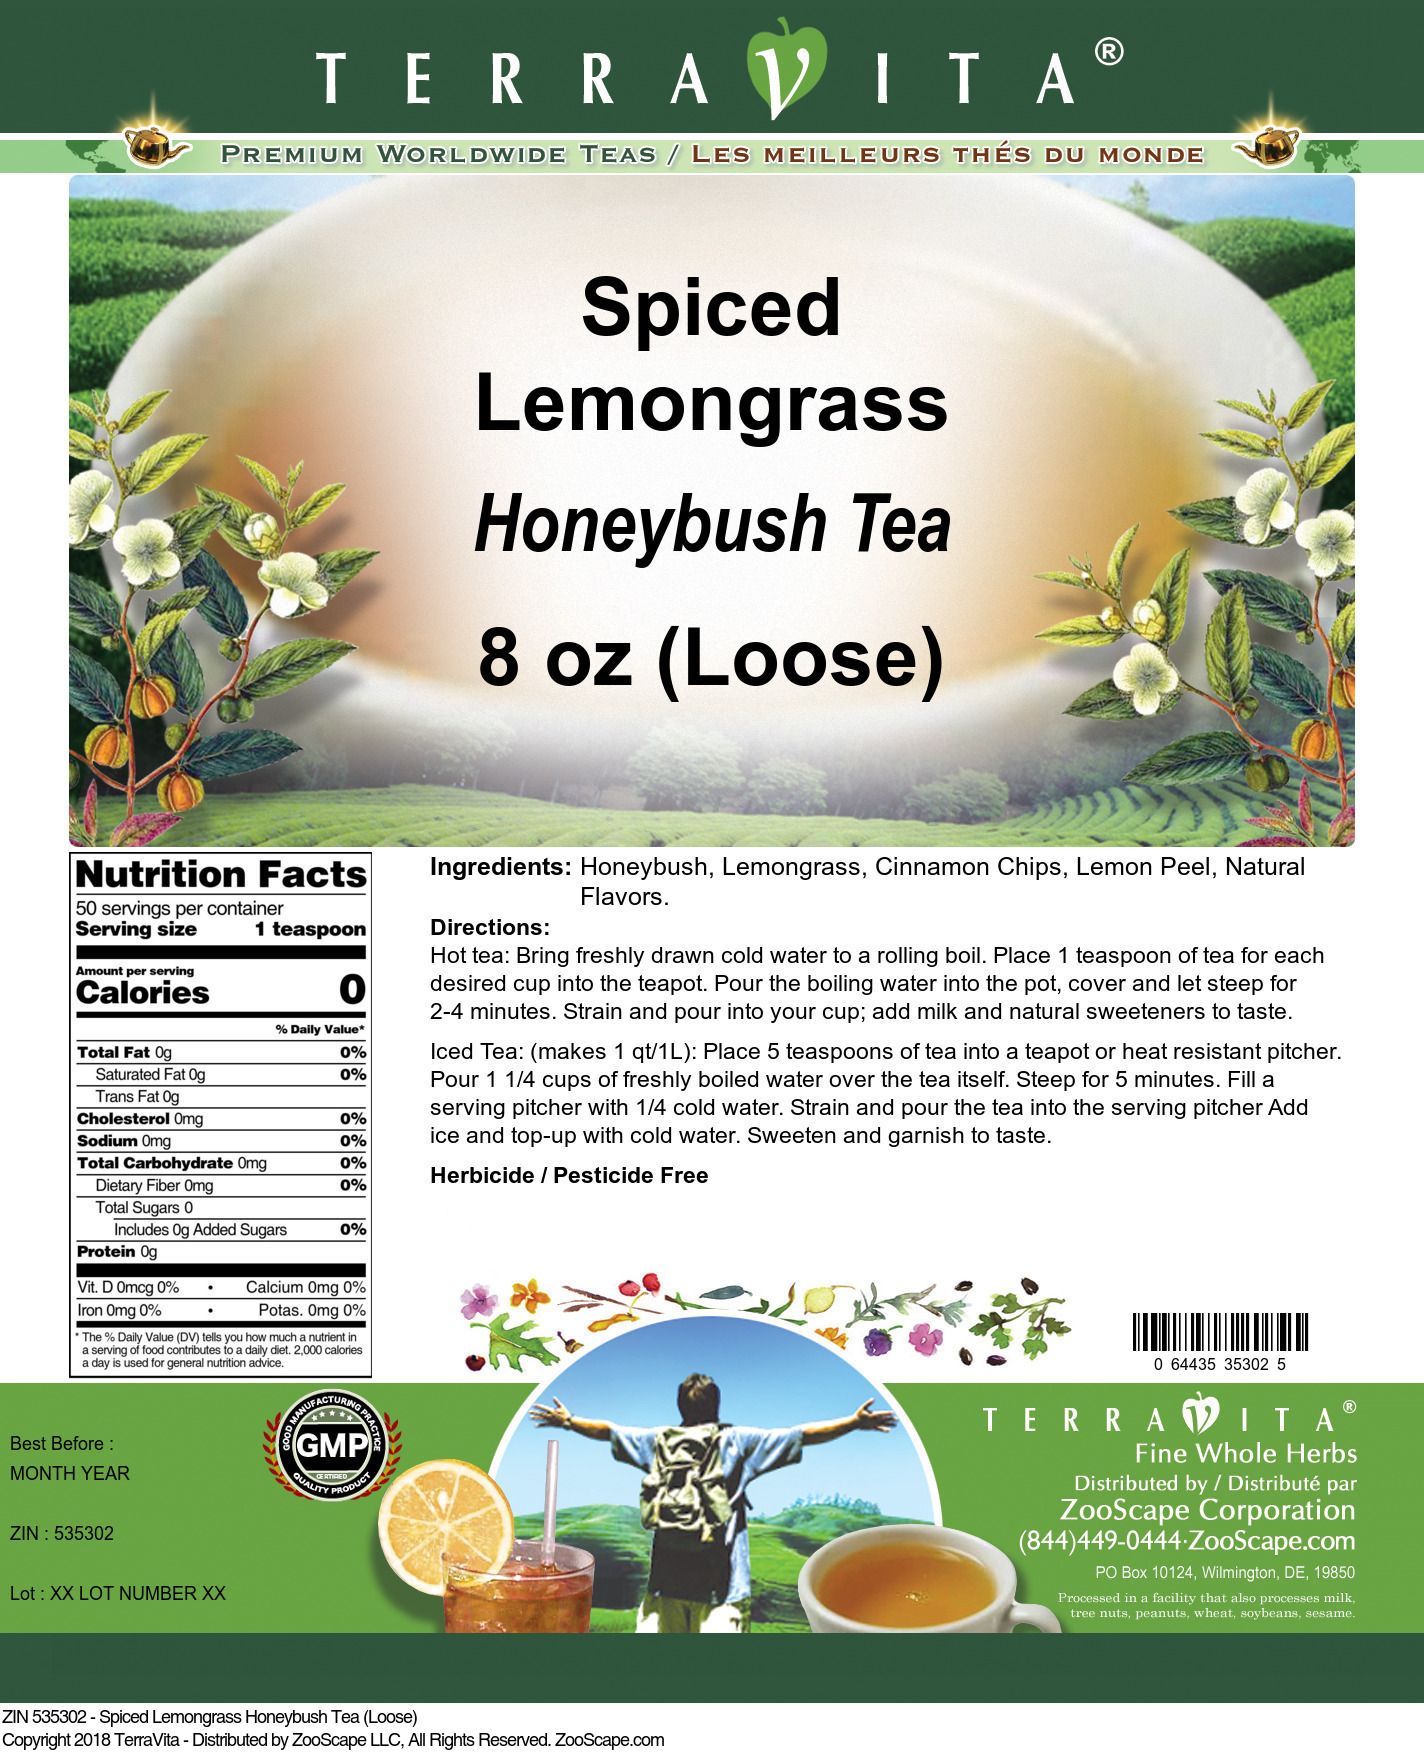 Spiced Lemongrass Honeybush Tea (Loose) - Label